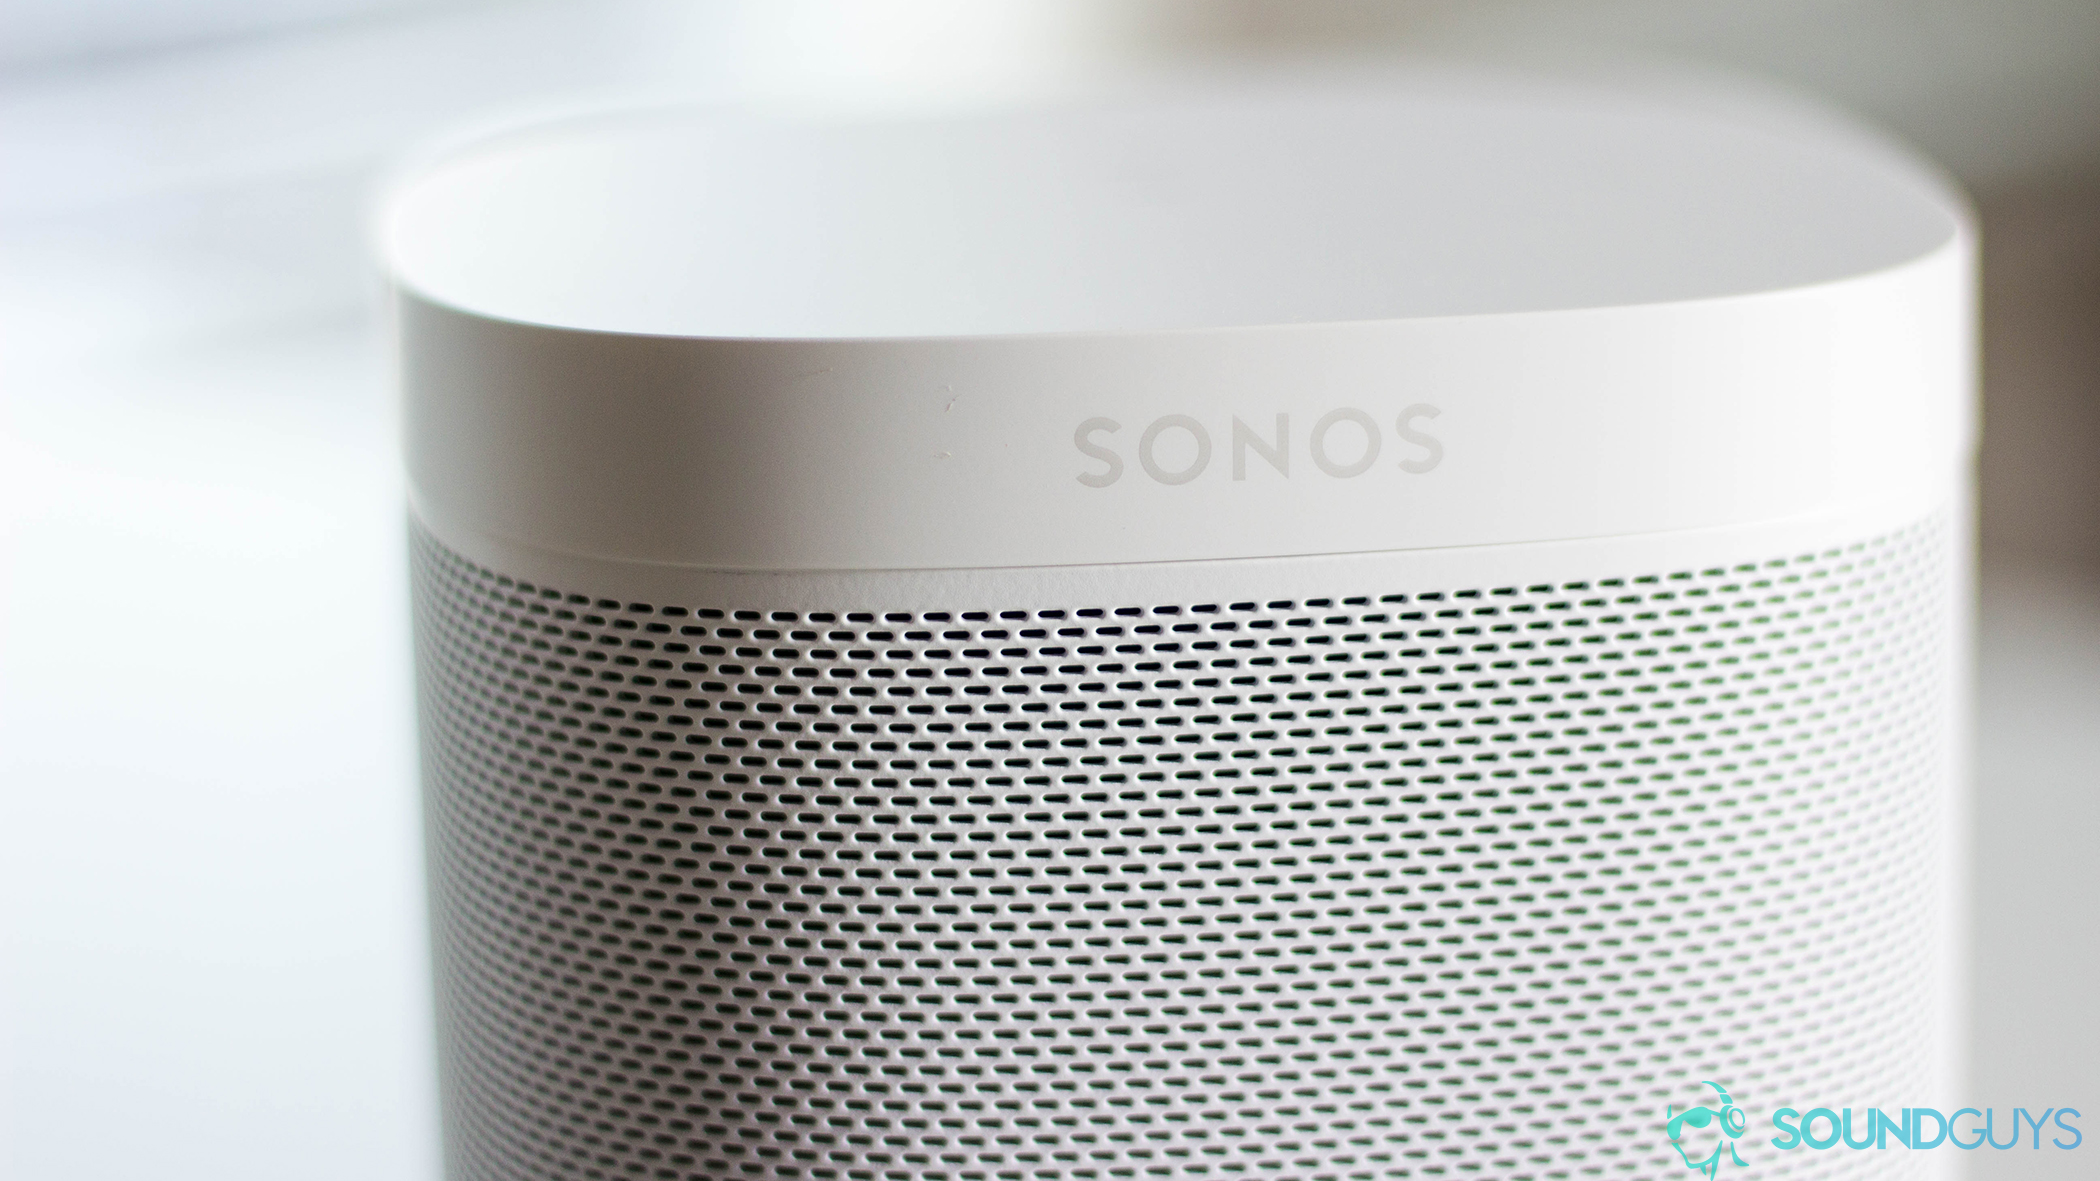 Close-up image of the Sonos logo.